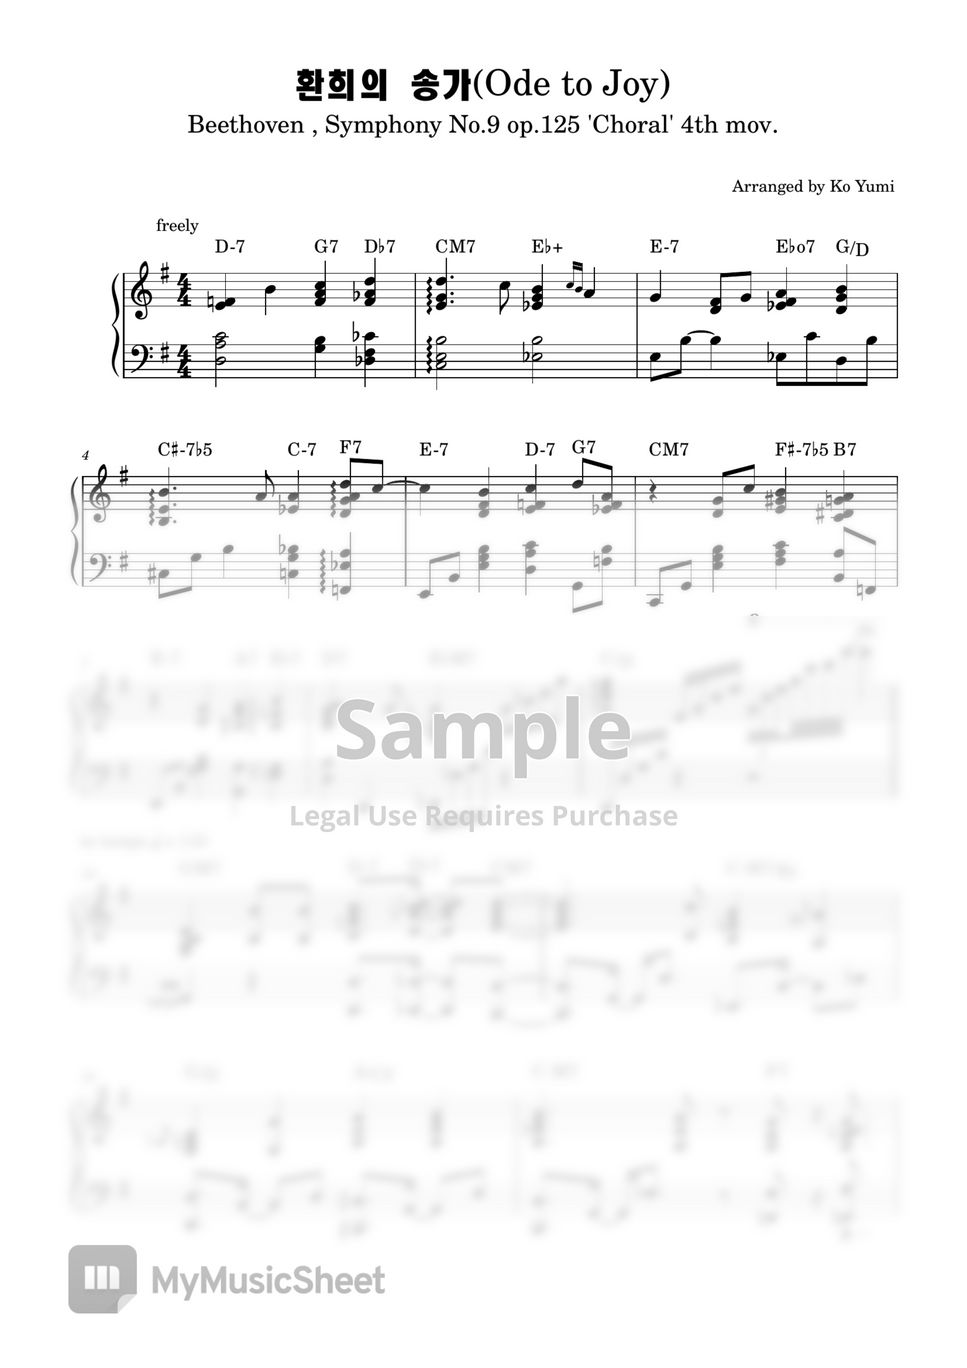 Beethoven - Ode to Joy (Jazz Ver.) by KoYumi Music